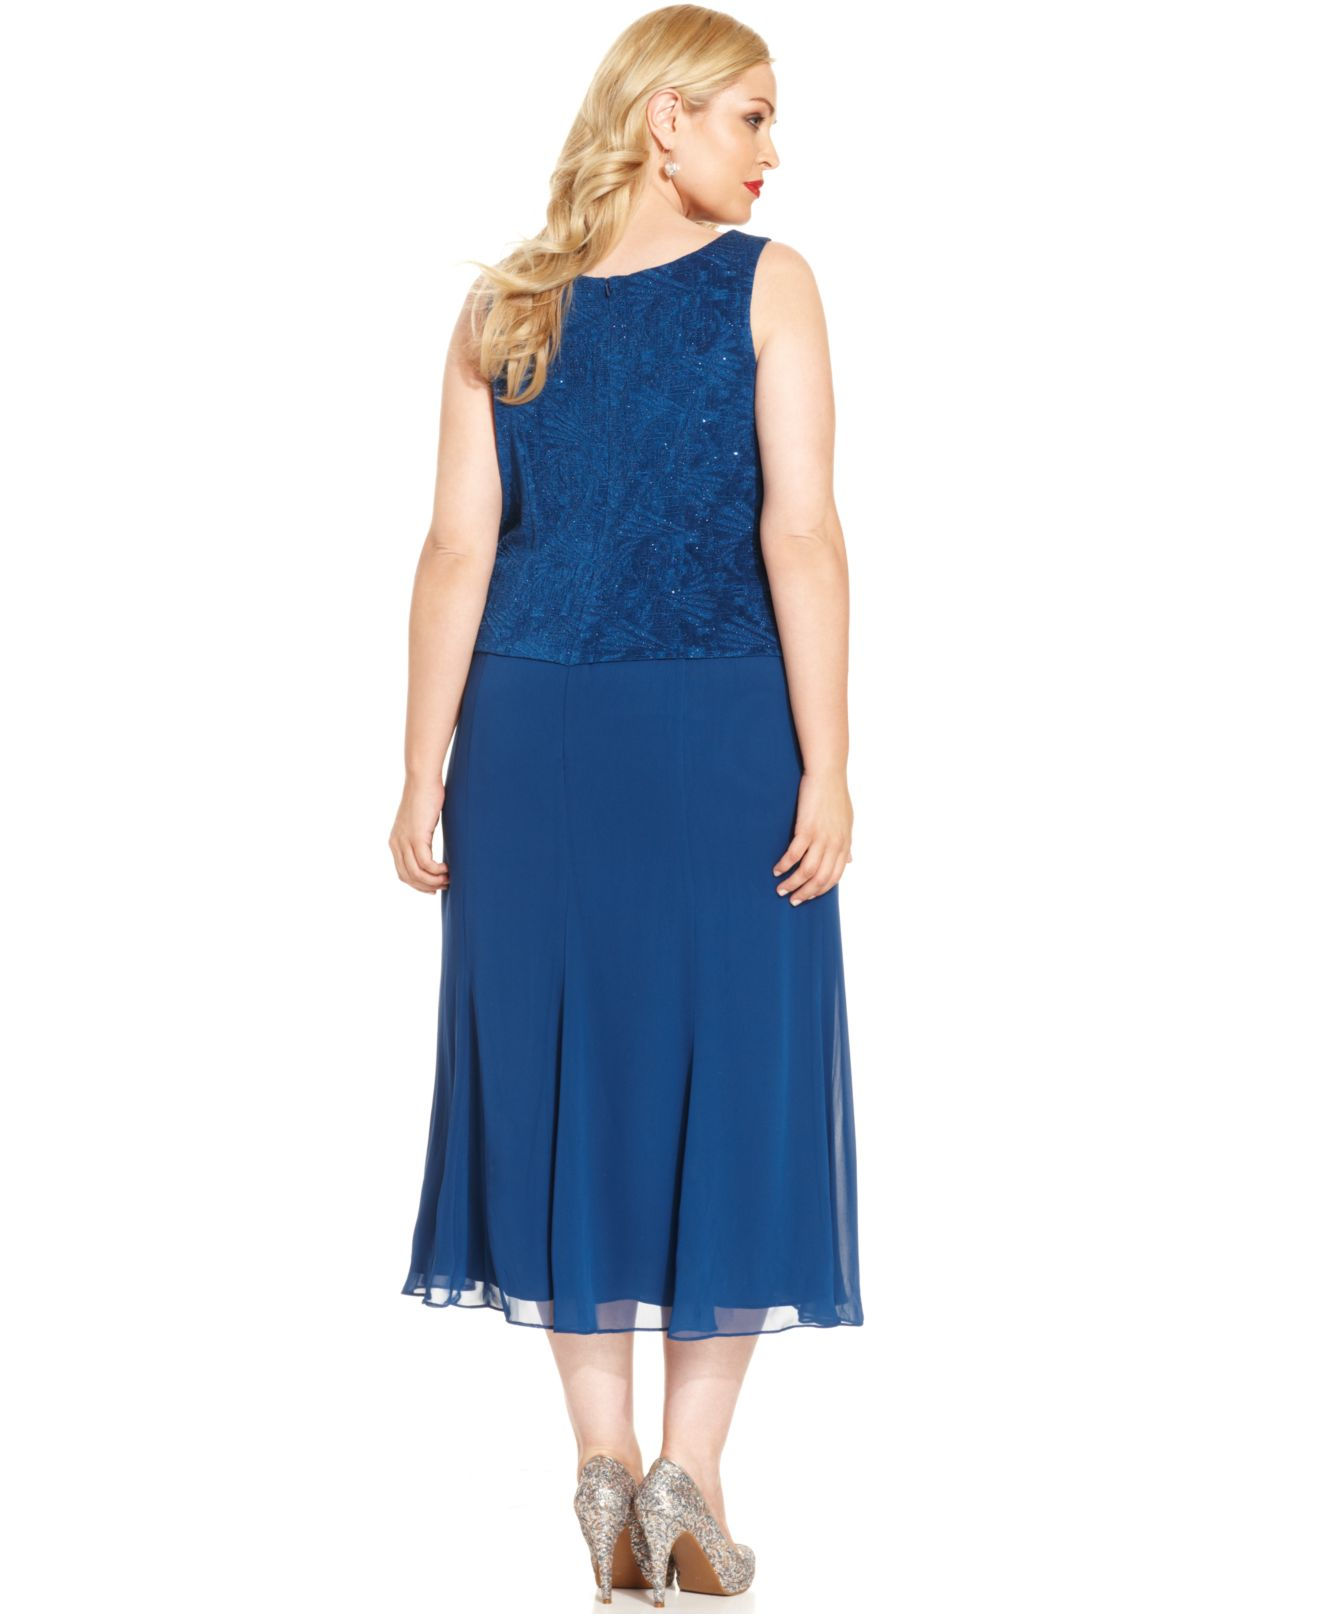 Lyst - Alex Evenings Plus Size Sparkle Jacquard Dress And Jacket in Blue